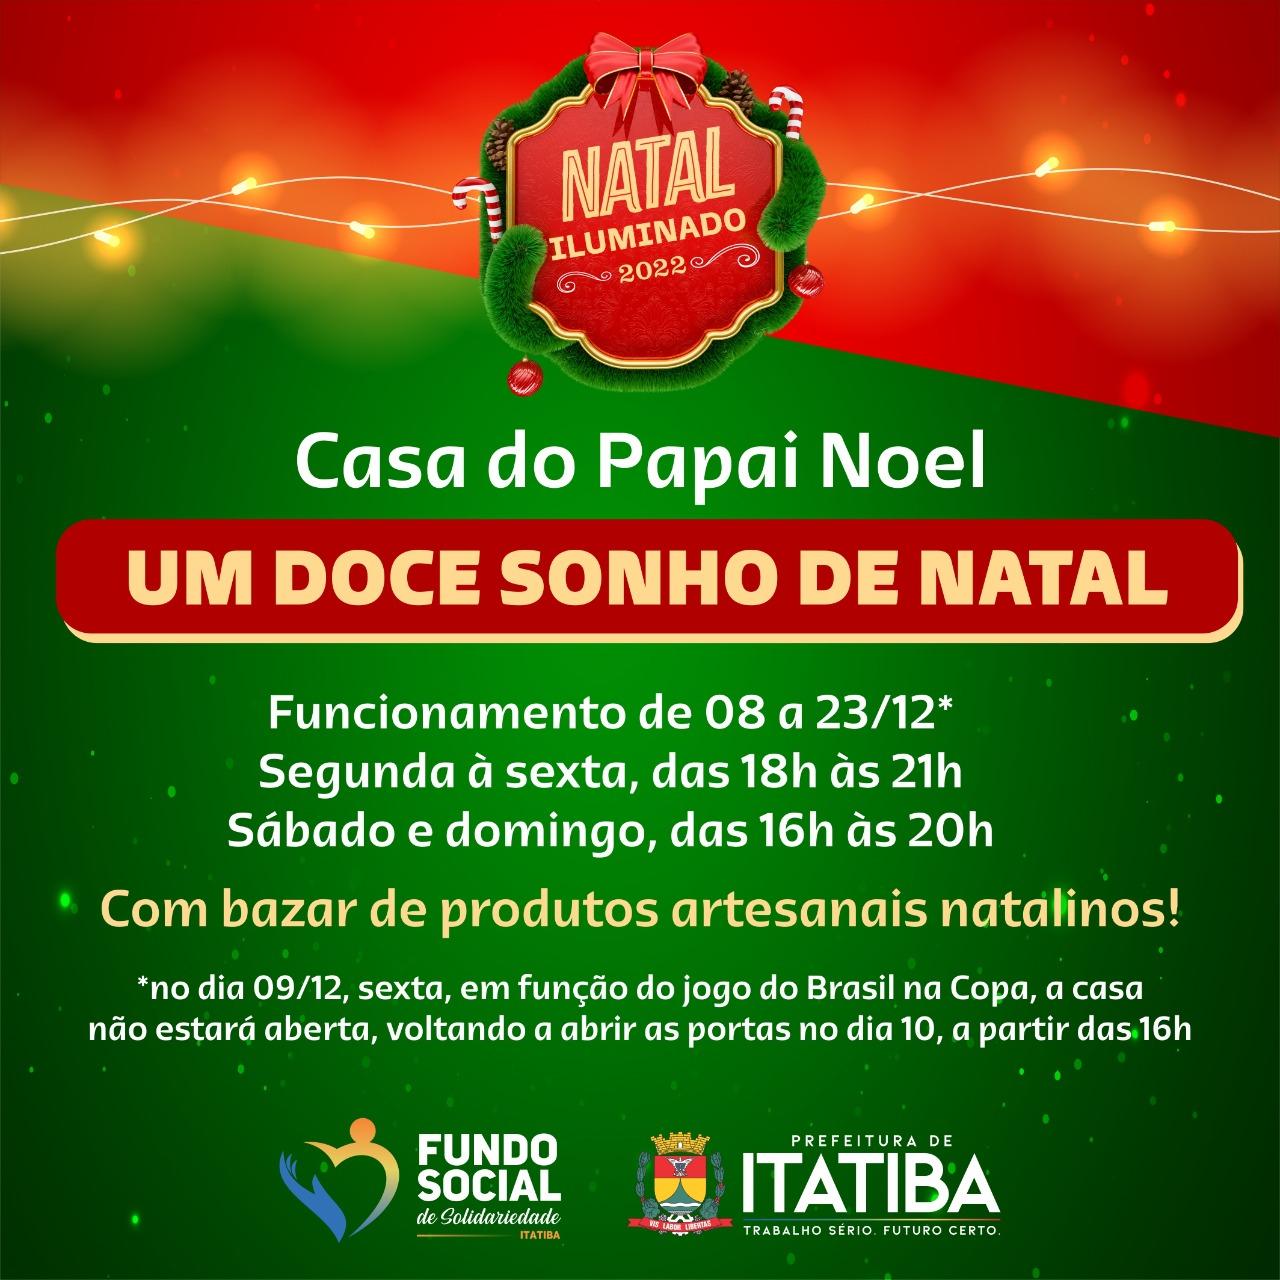 Natal Iluminado de Itatiba inaugura Casa do Papai Noel na noite desta  quinta (08/12) - Jornal de Itatiba